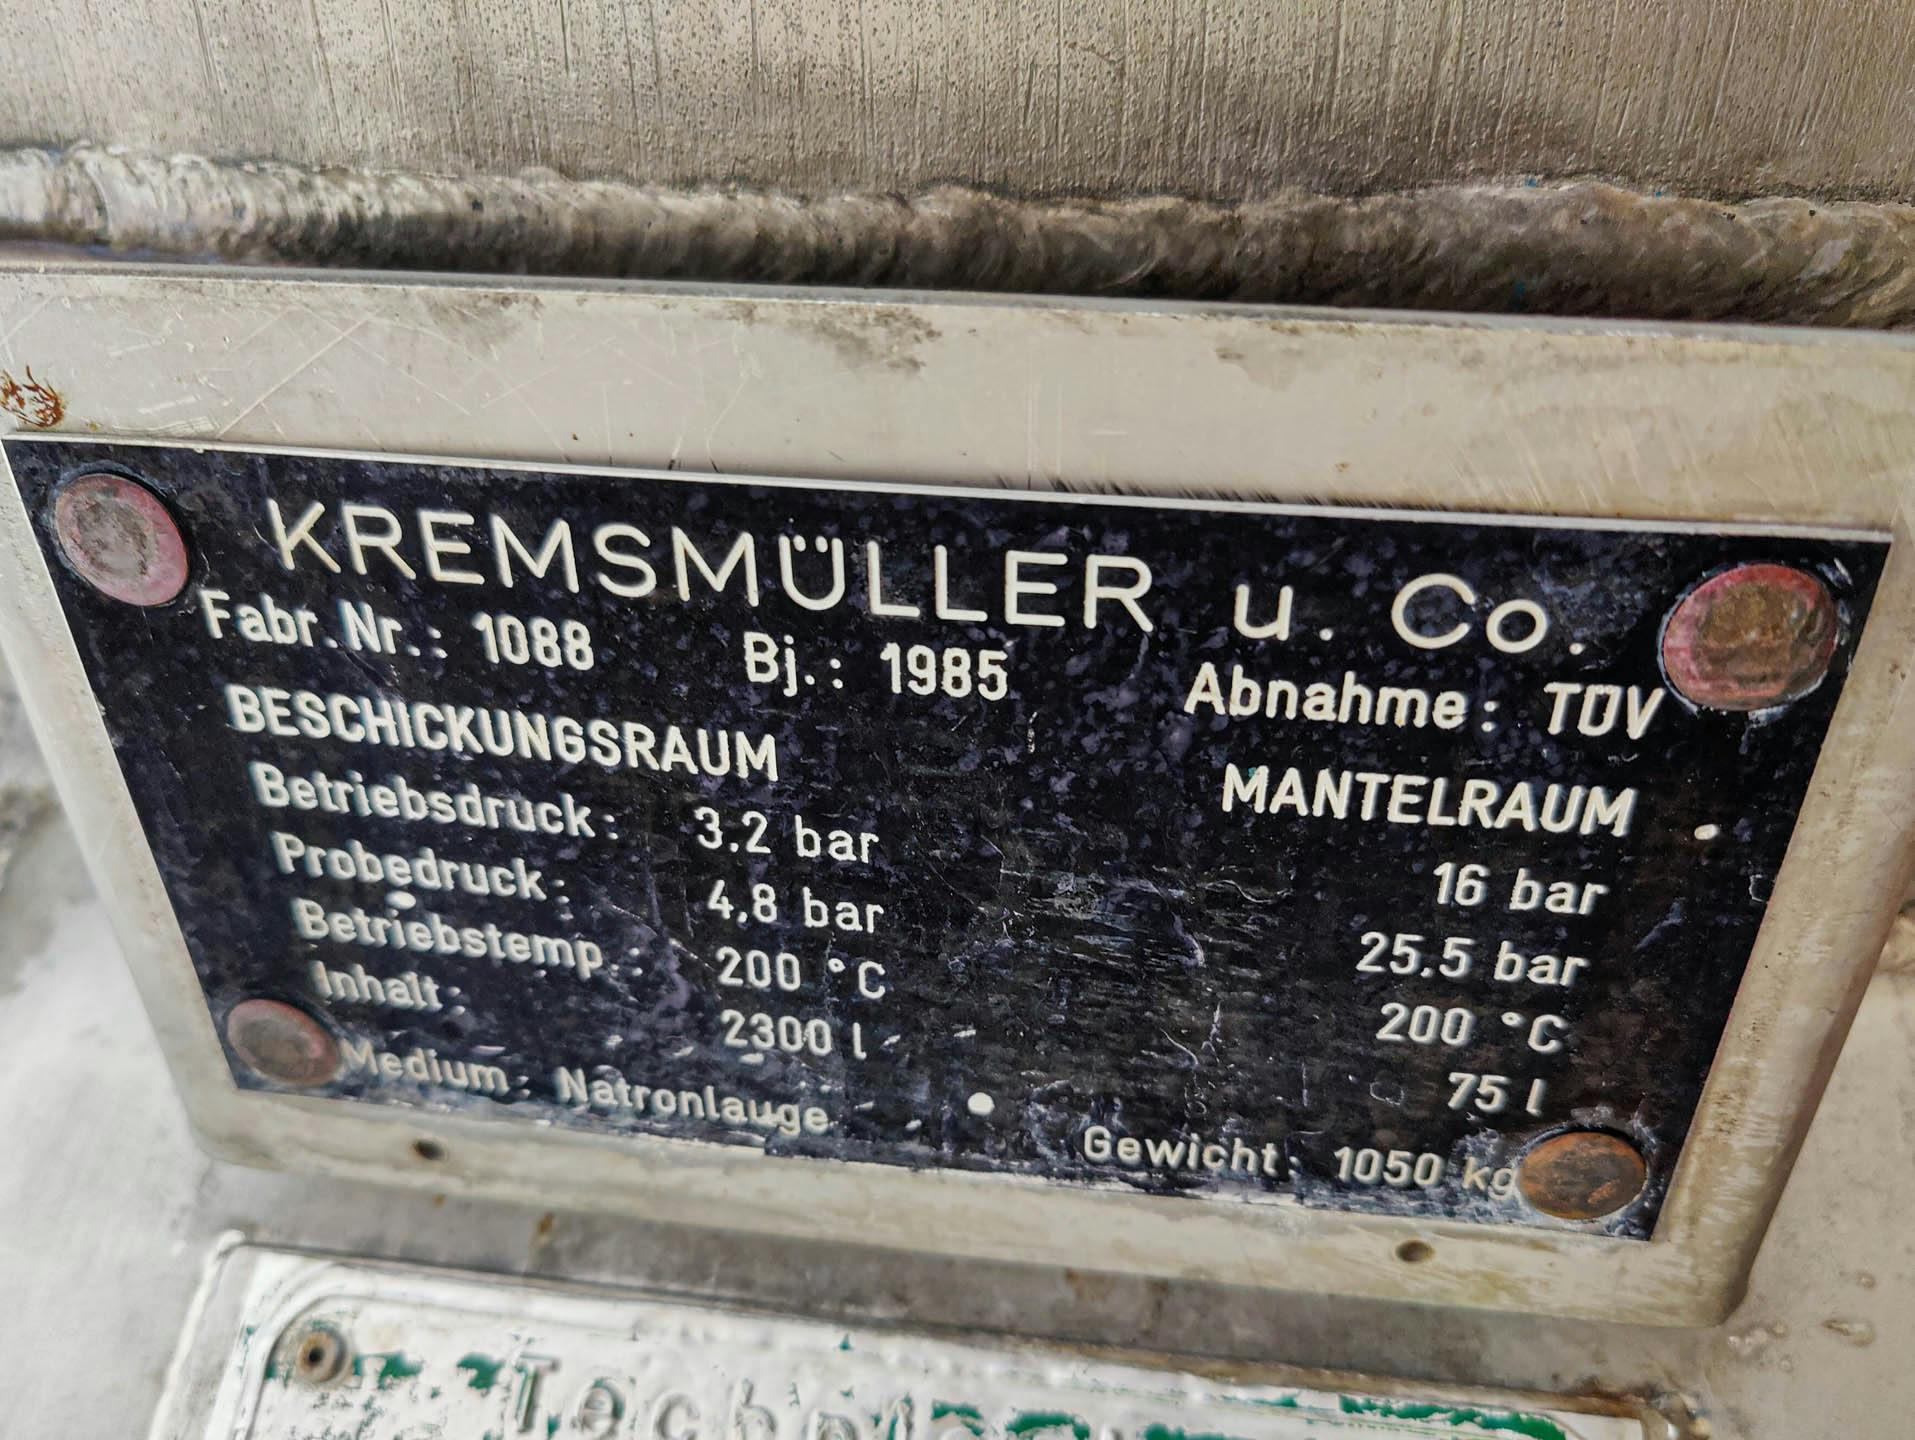 Kremsmüller 2000 Ltr. - Reactor de acero inoxidable - image 13